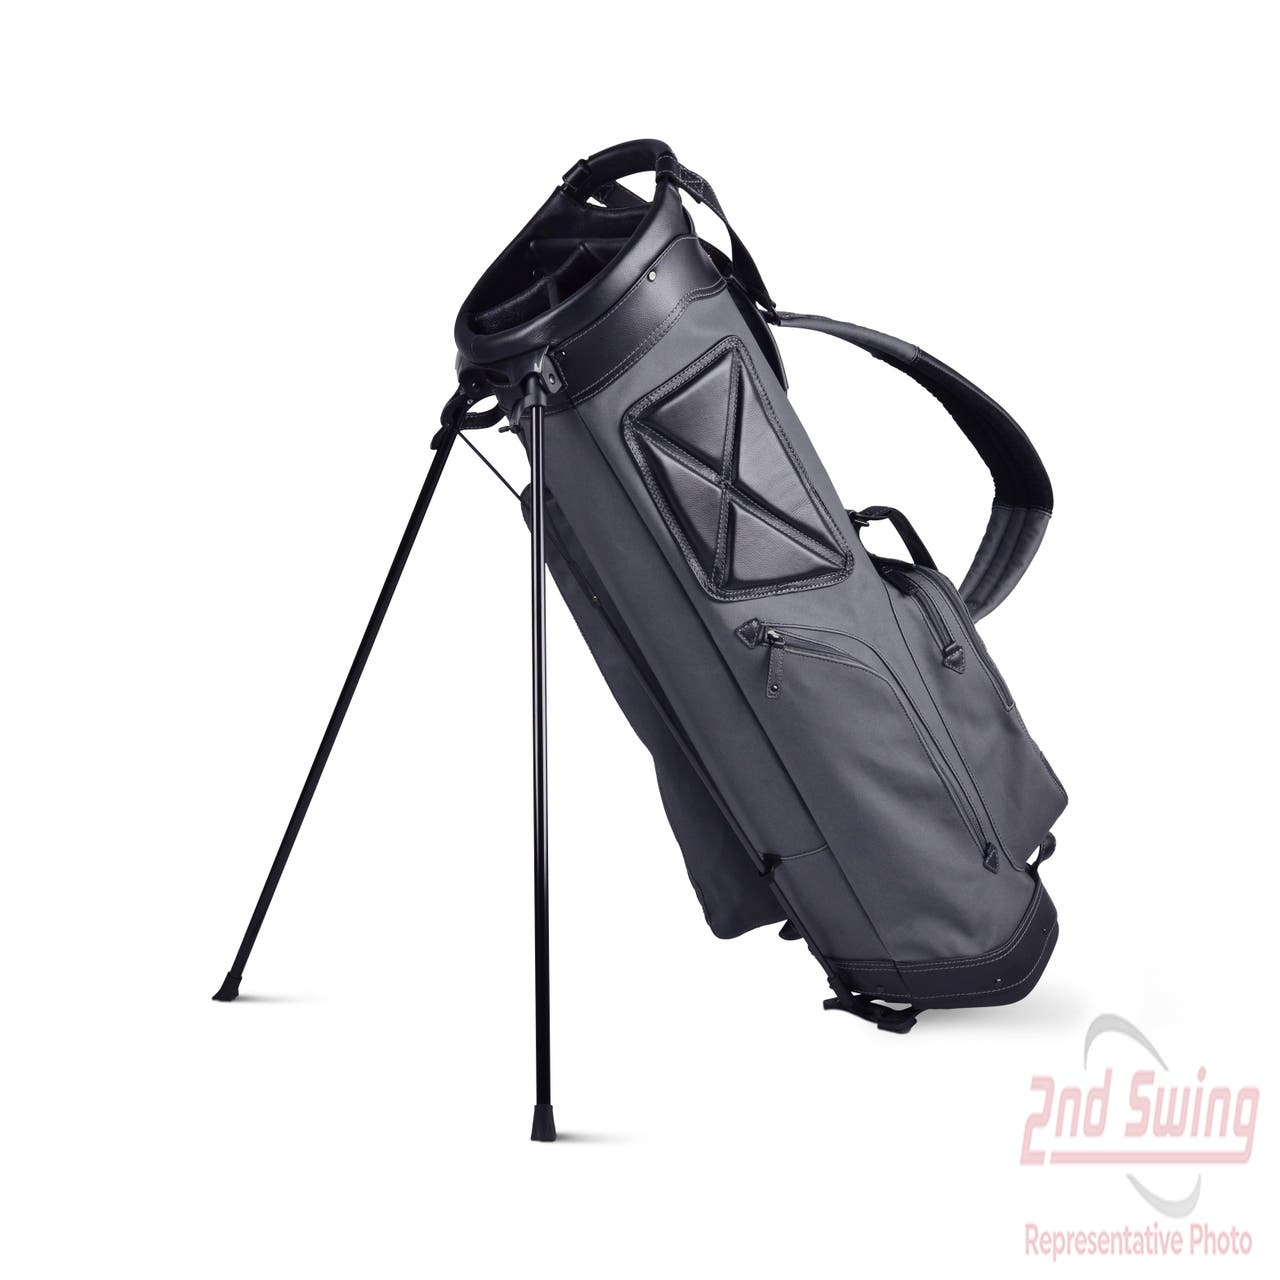 Retro golf bag - Fit For Purpose Golf